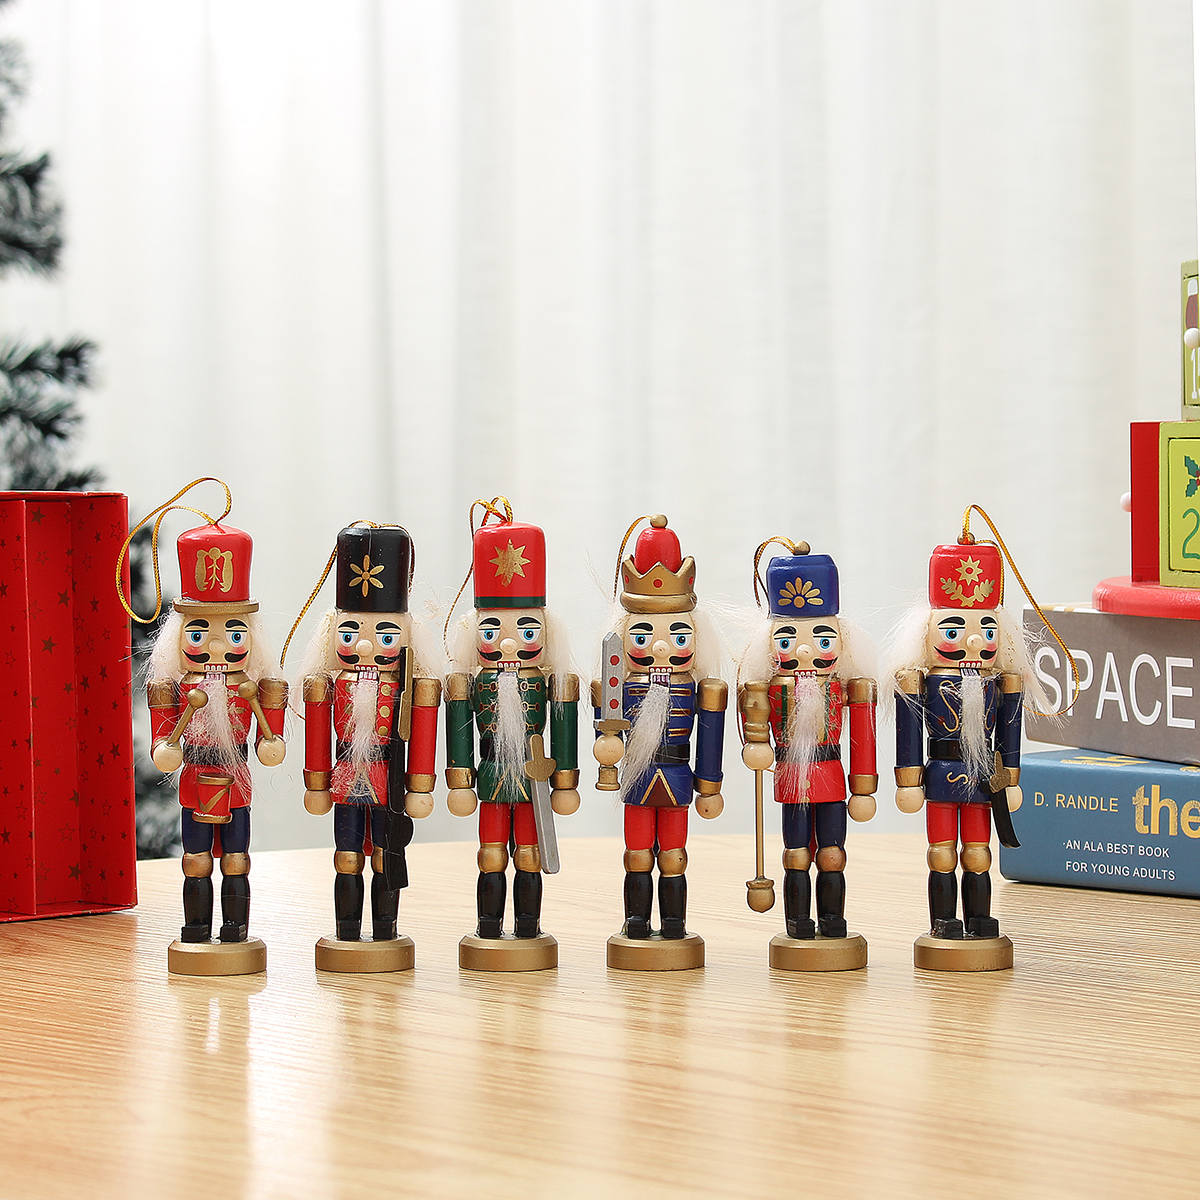 Wooden-Nutcracker-Doll-Soldier-Vintage-Handcraft-Decoration-Christmas-Gifts-1787904-2